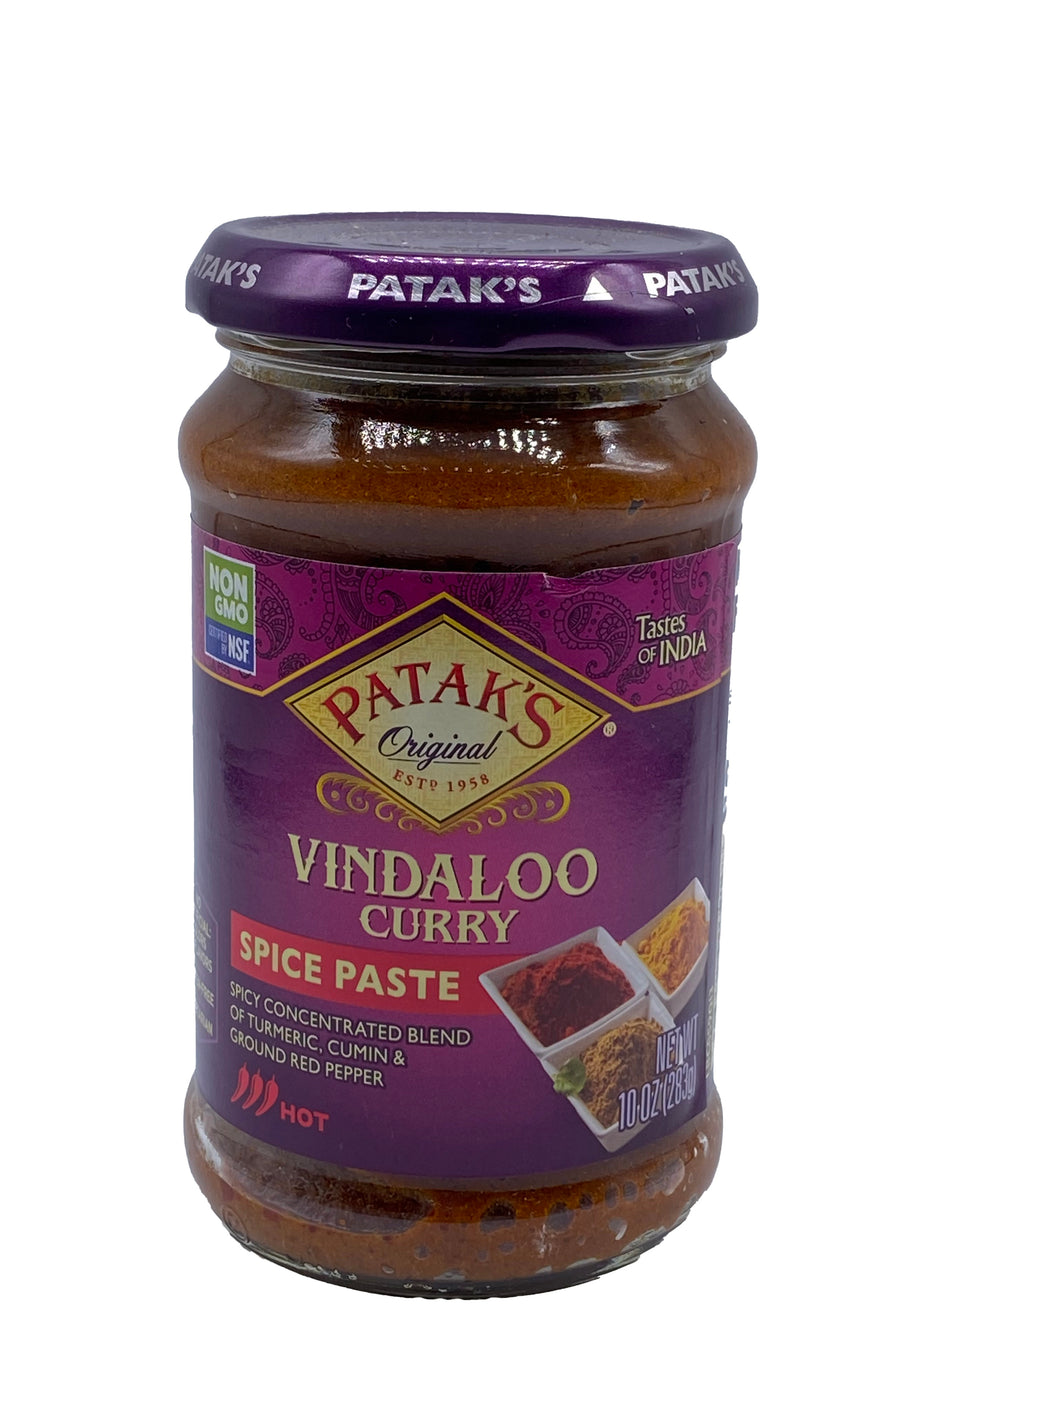 Patak's Vindaloo Curry Spice Paste